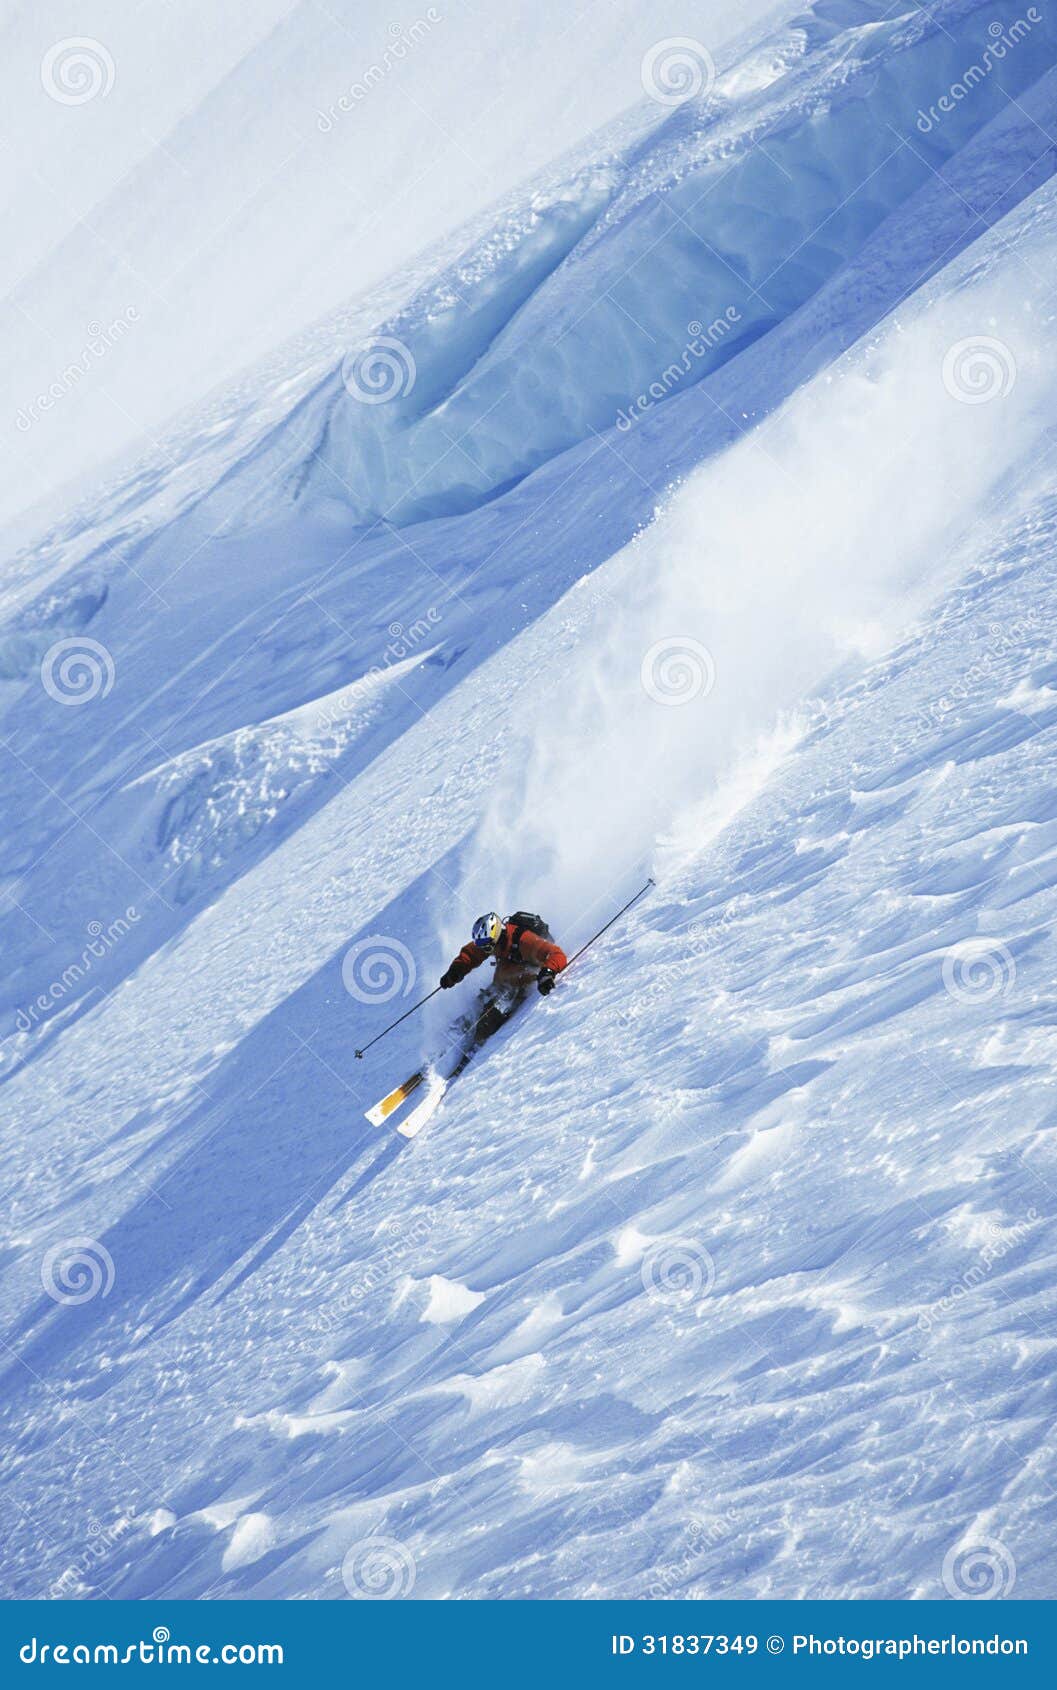 man skiing on steep slope